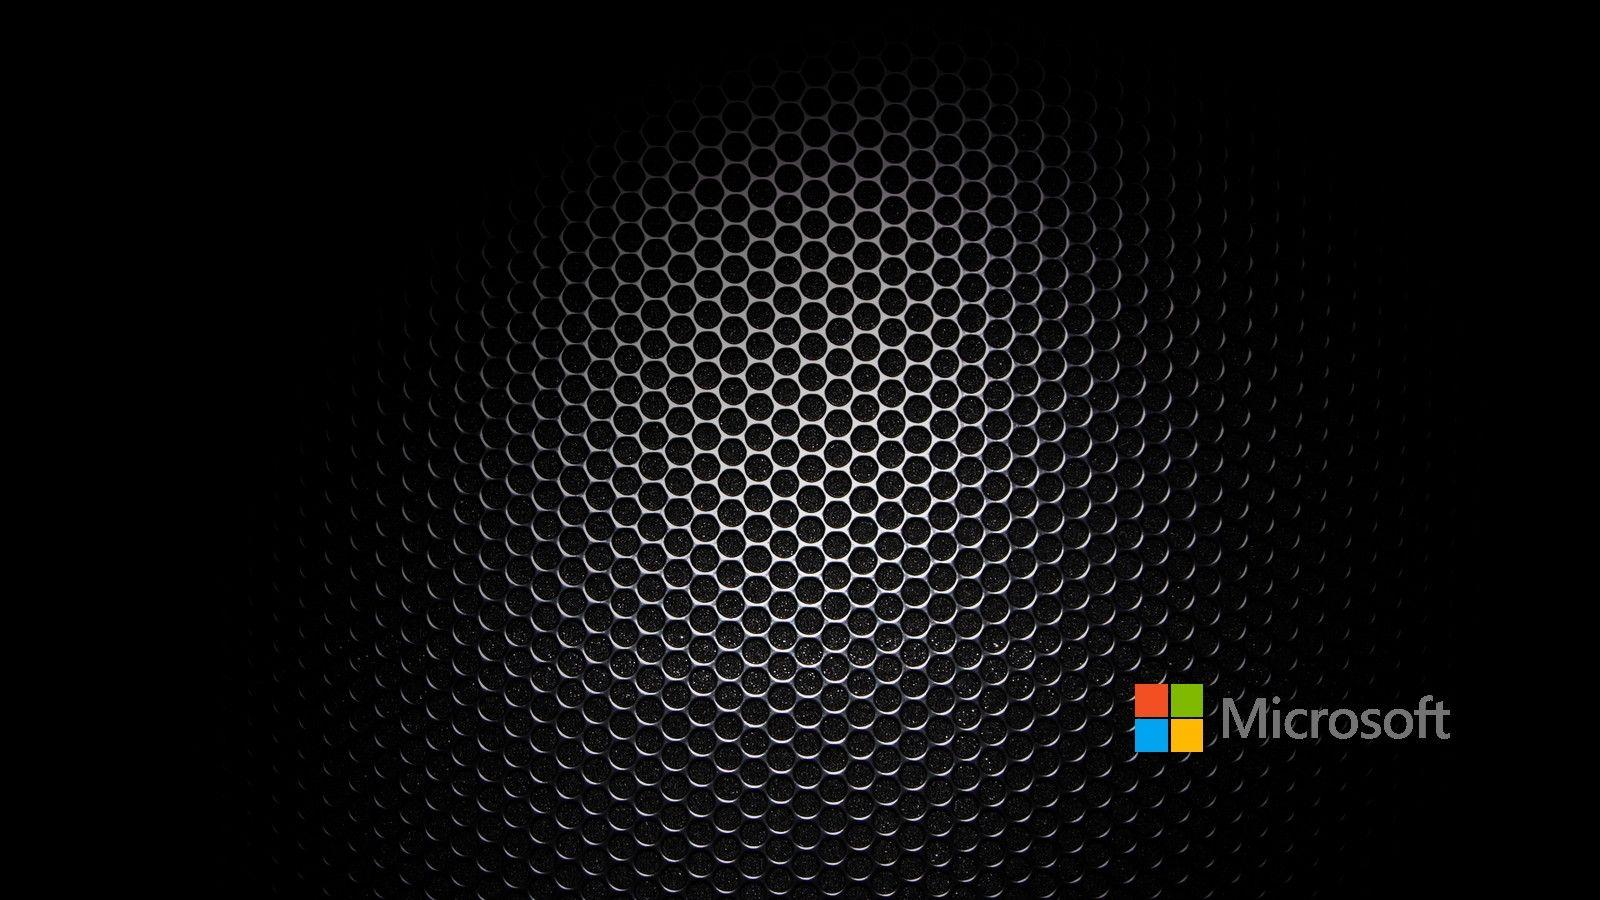 Microsoft Wallpaper Desktops 28428 HD Picture. Top Background Free